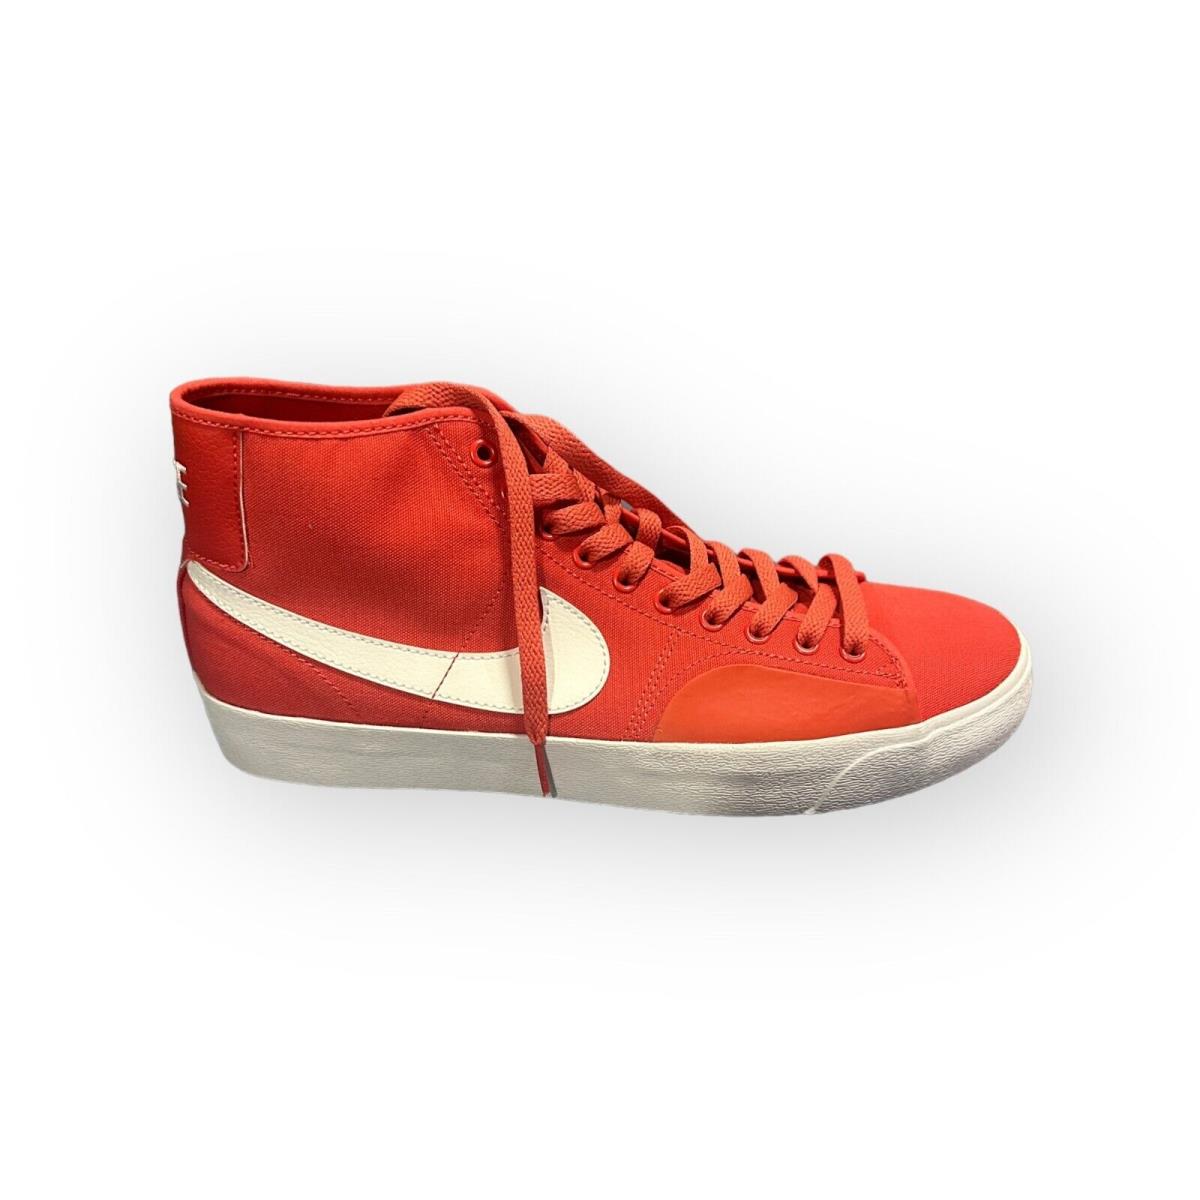 Nike SB Blazer Court Mid - Lobster White - US Men`s Size 10.5 DC8901-600 - Red